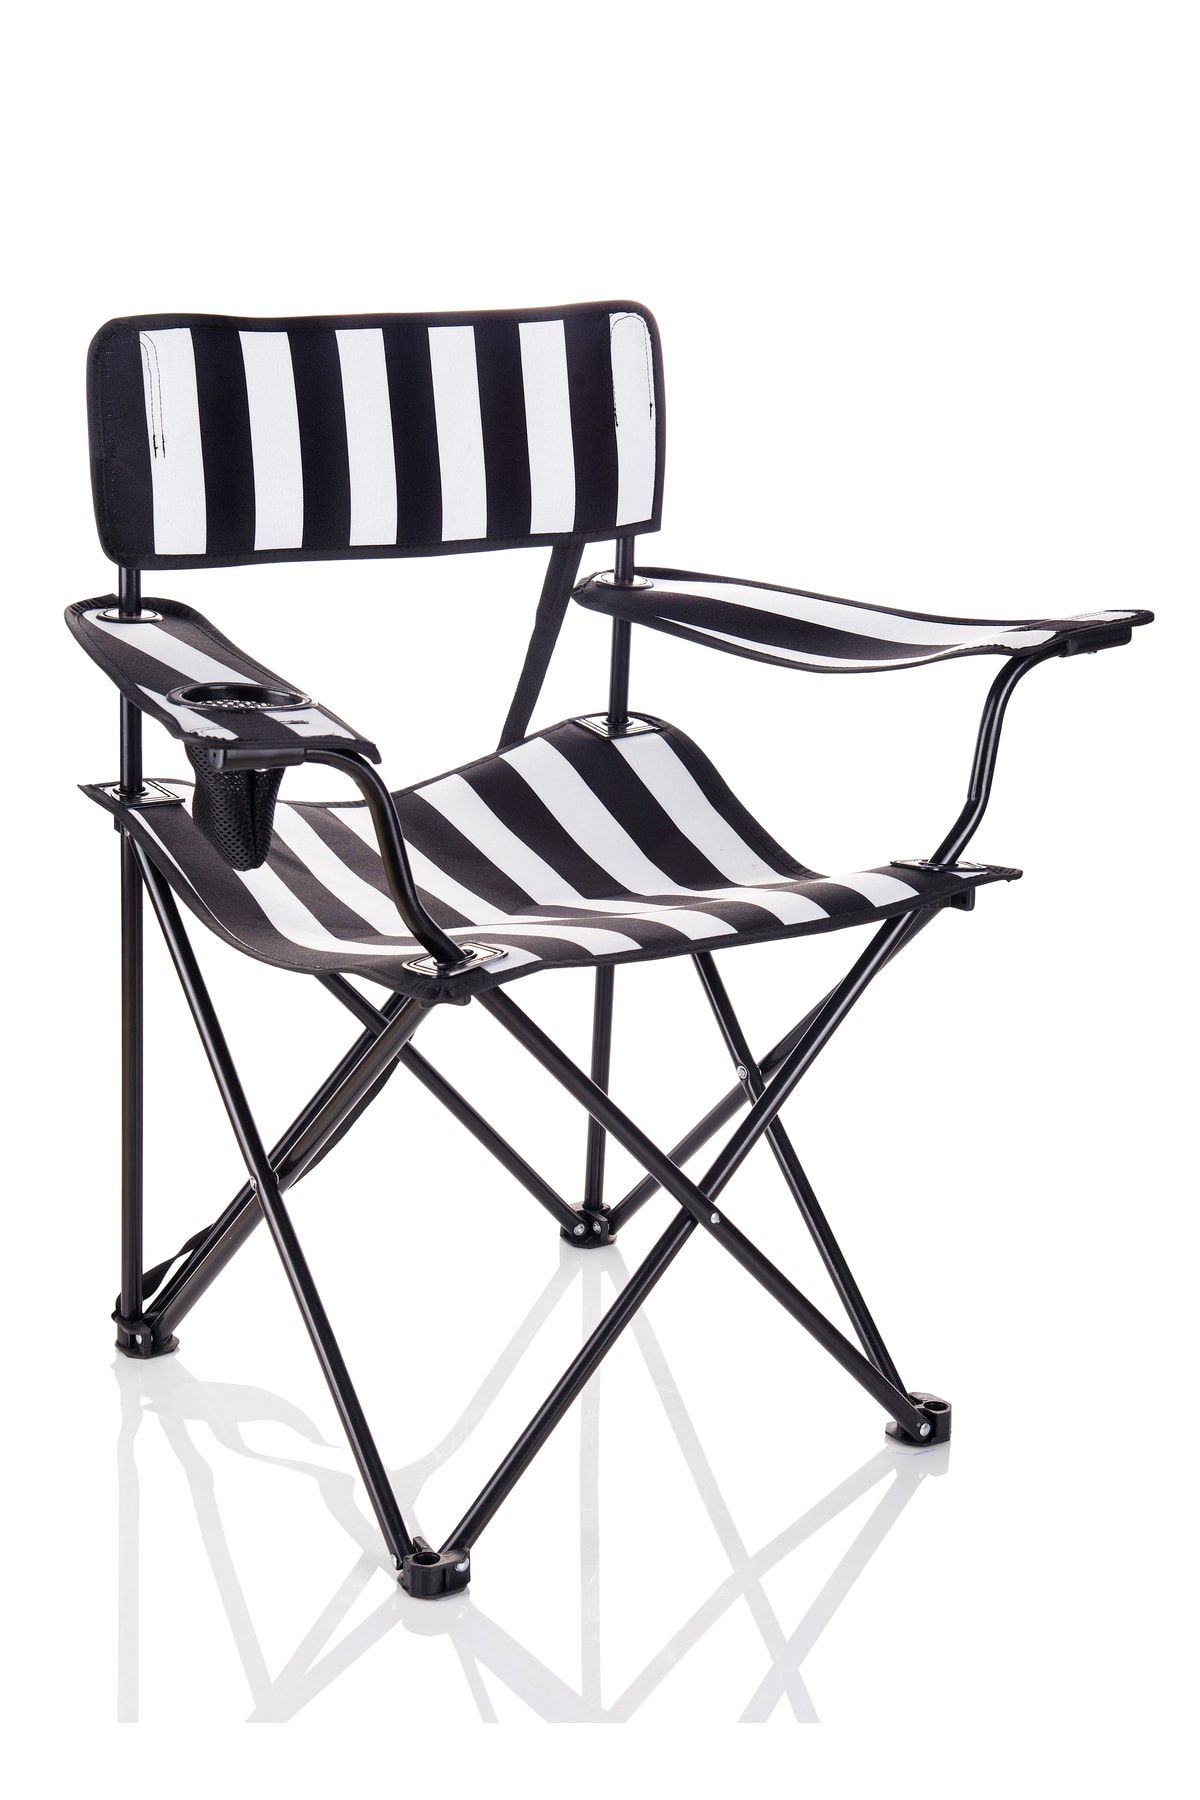 Miras Fans Pro Kamp Sandalyesi , Siyah-beyaz (2 YIL GARANTİ)